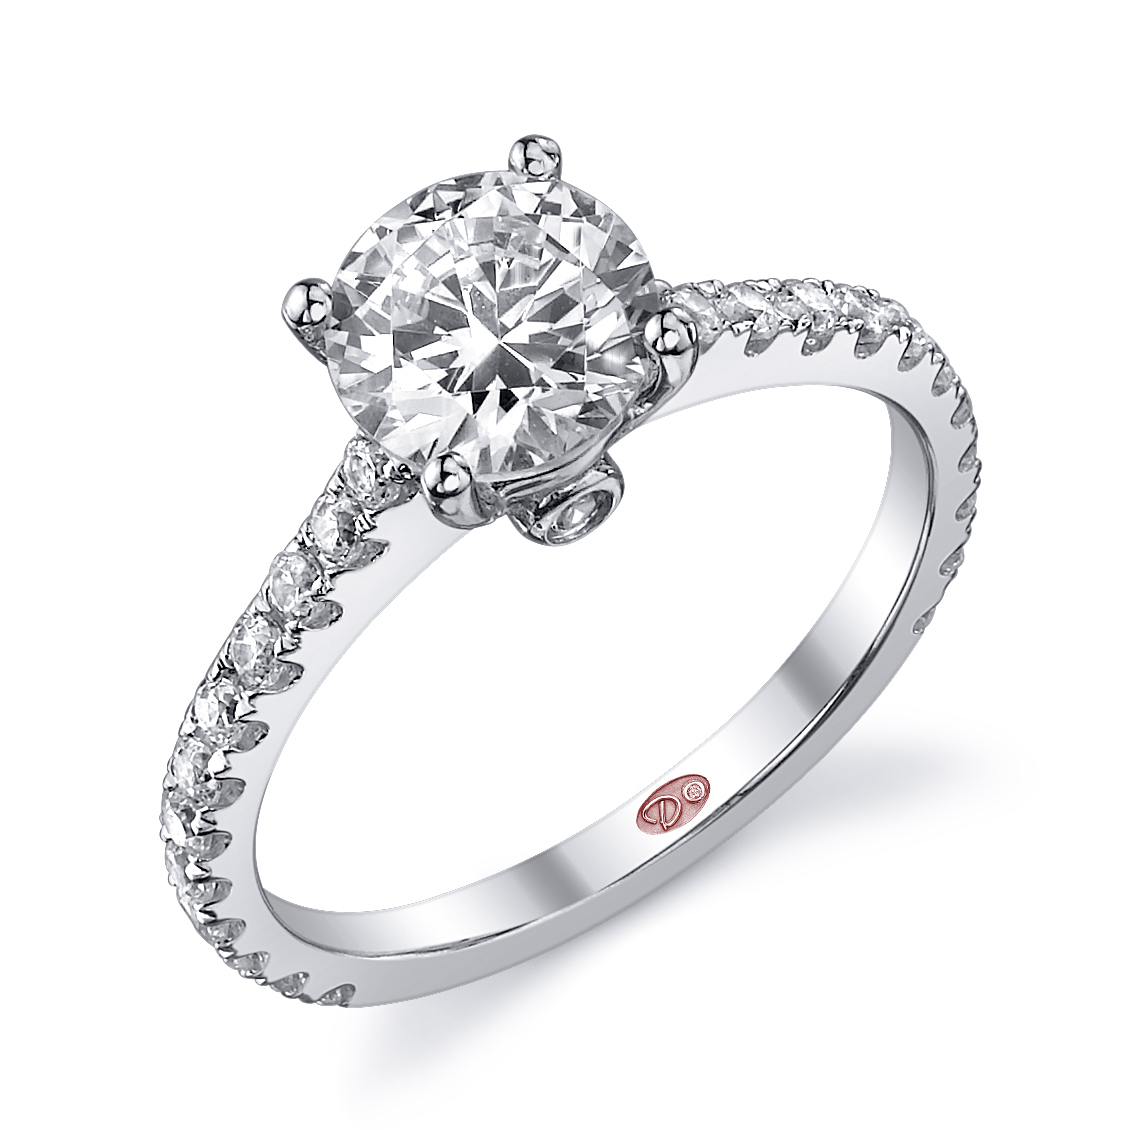 Designer Engagement Rings - DW4777